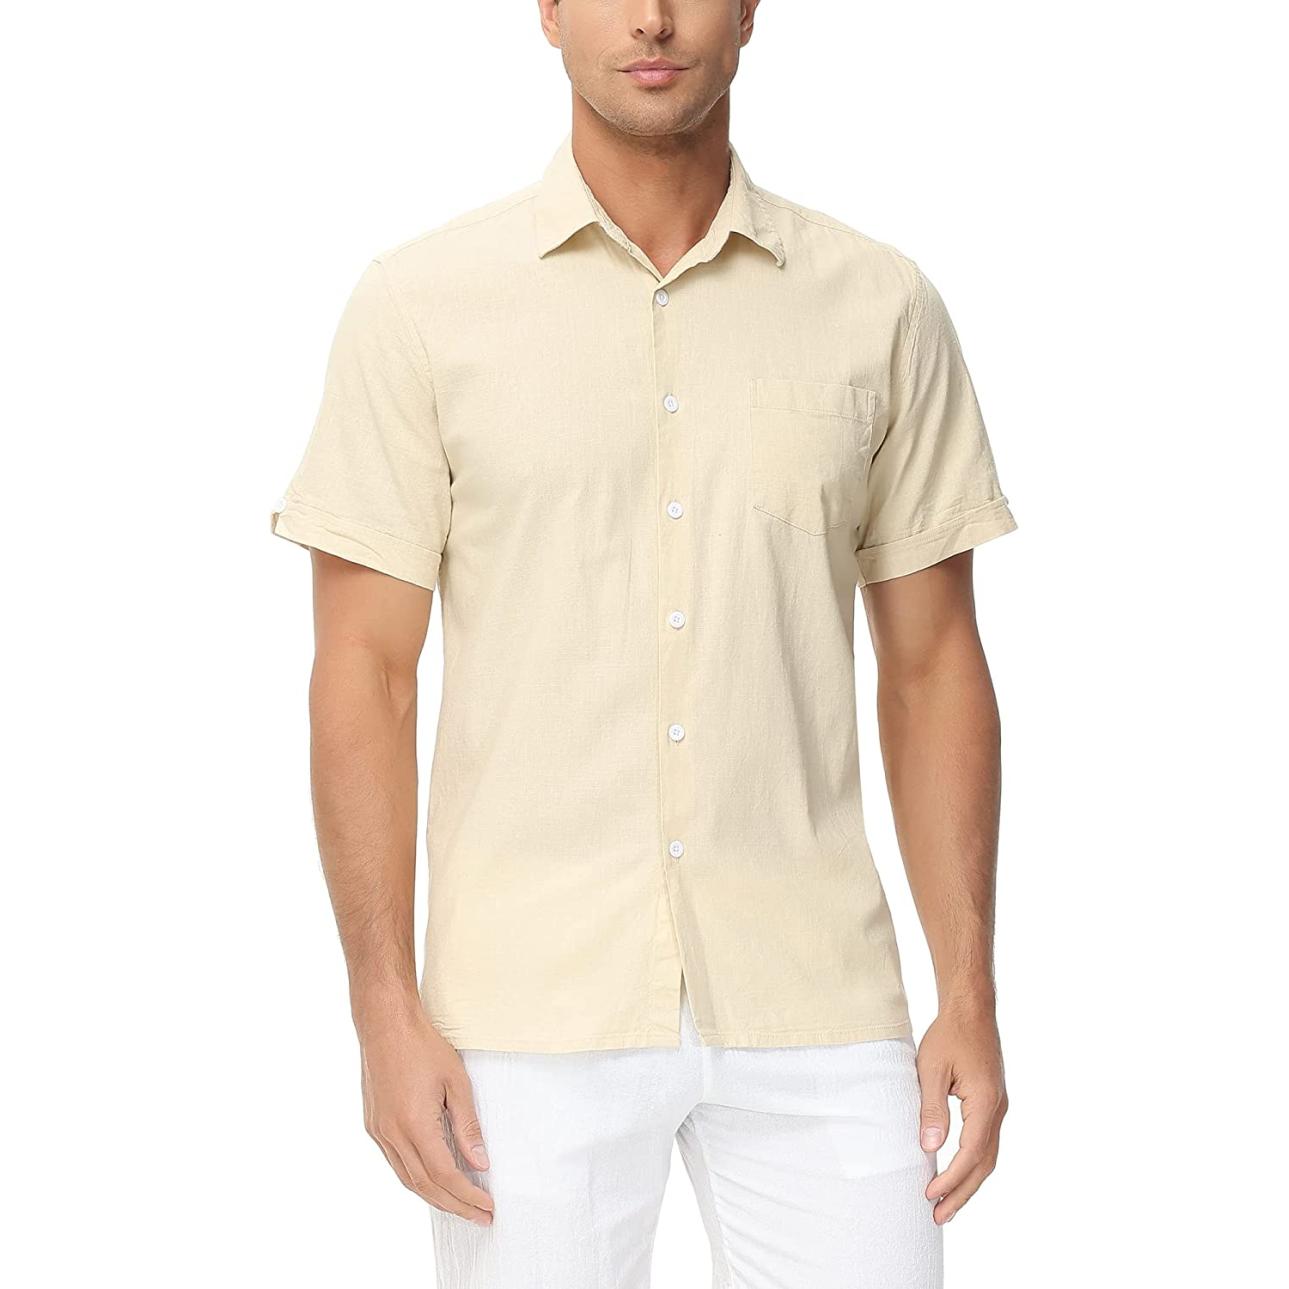 71SyQbZKLrL. AC UL1500  750x1289 - 65% off MCEDAR Short Sleeves Linen-Blend Shirts for Men